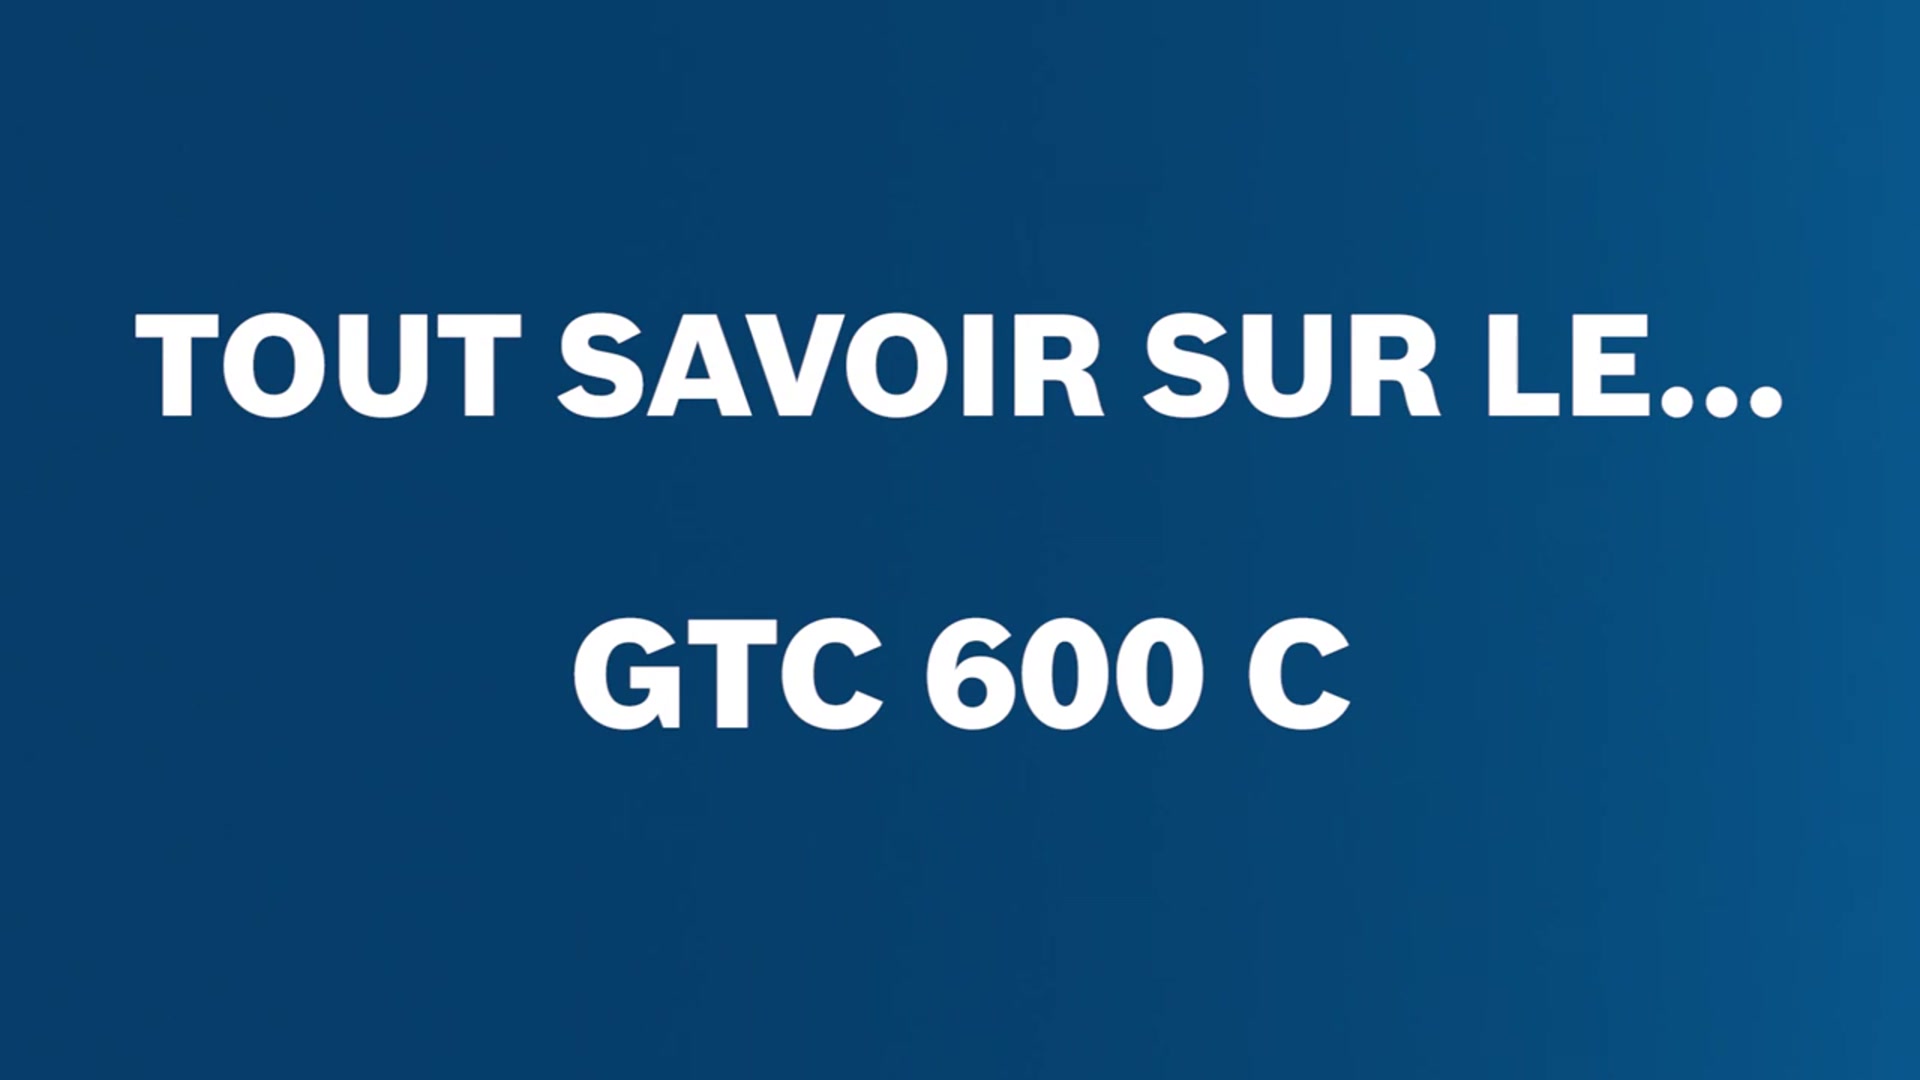 GTC 600 C